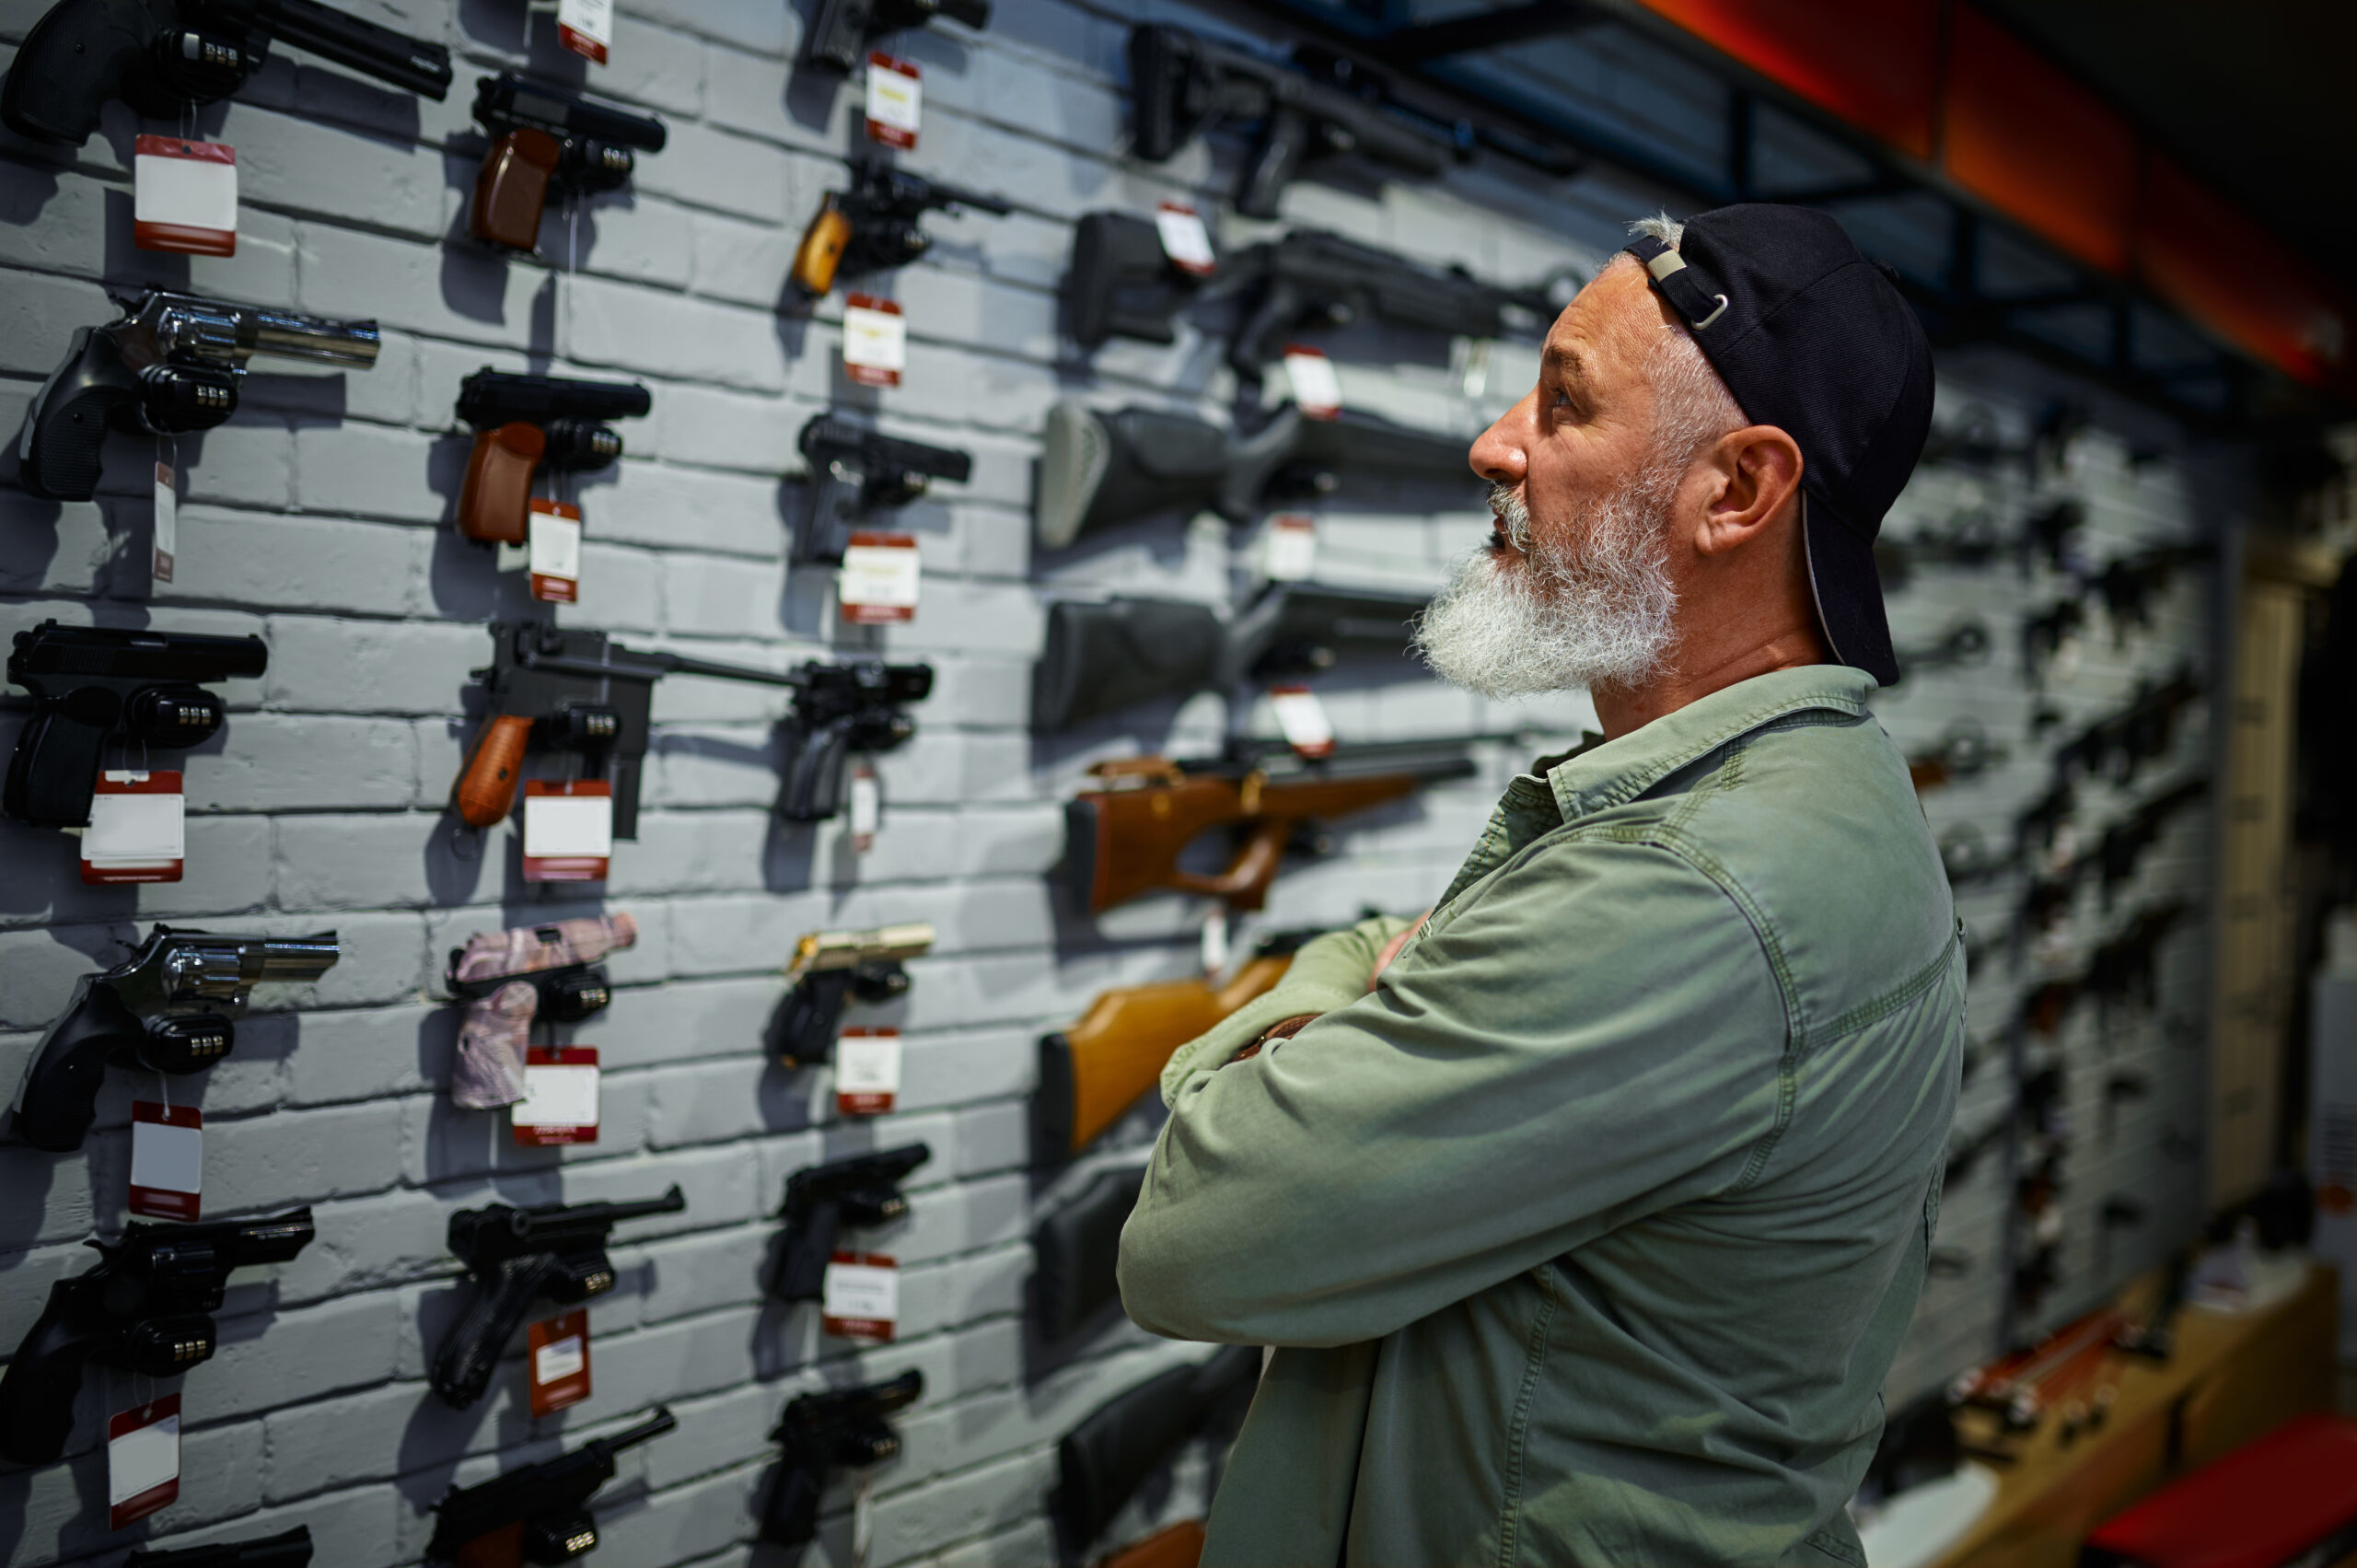 Court Battle Over New Oregon Gun Control Law Still Ongoing